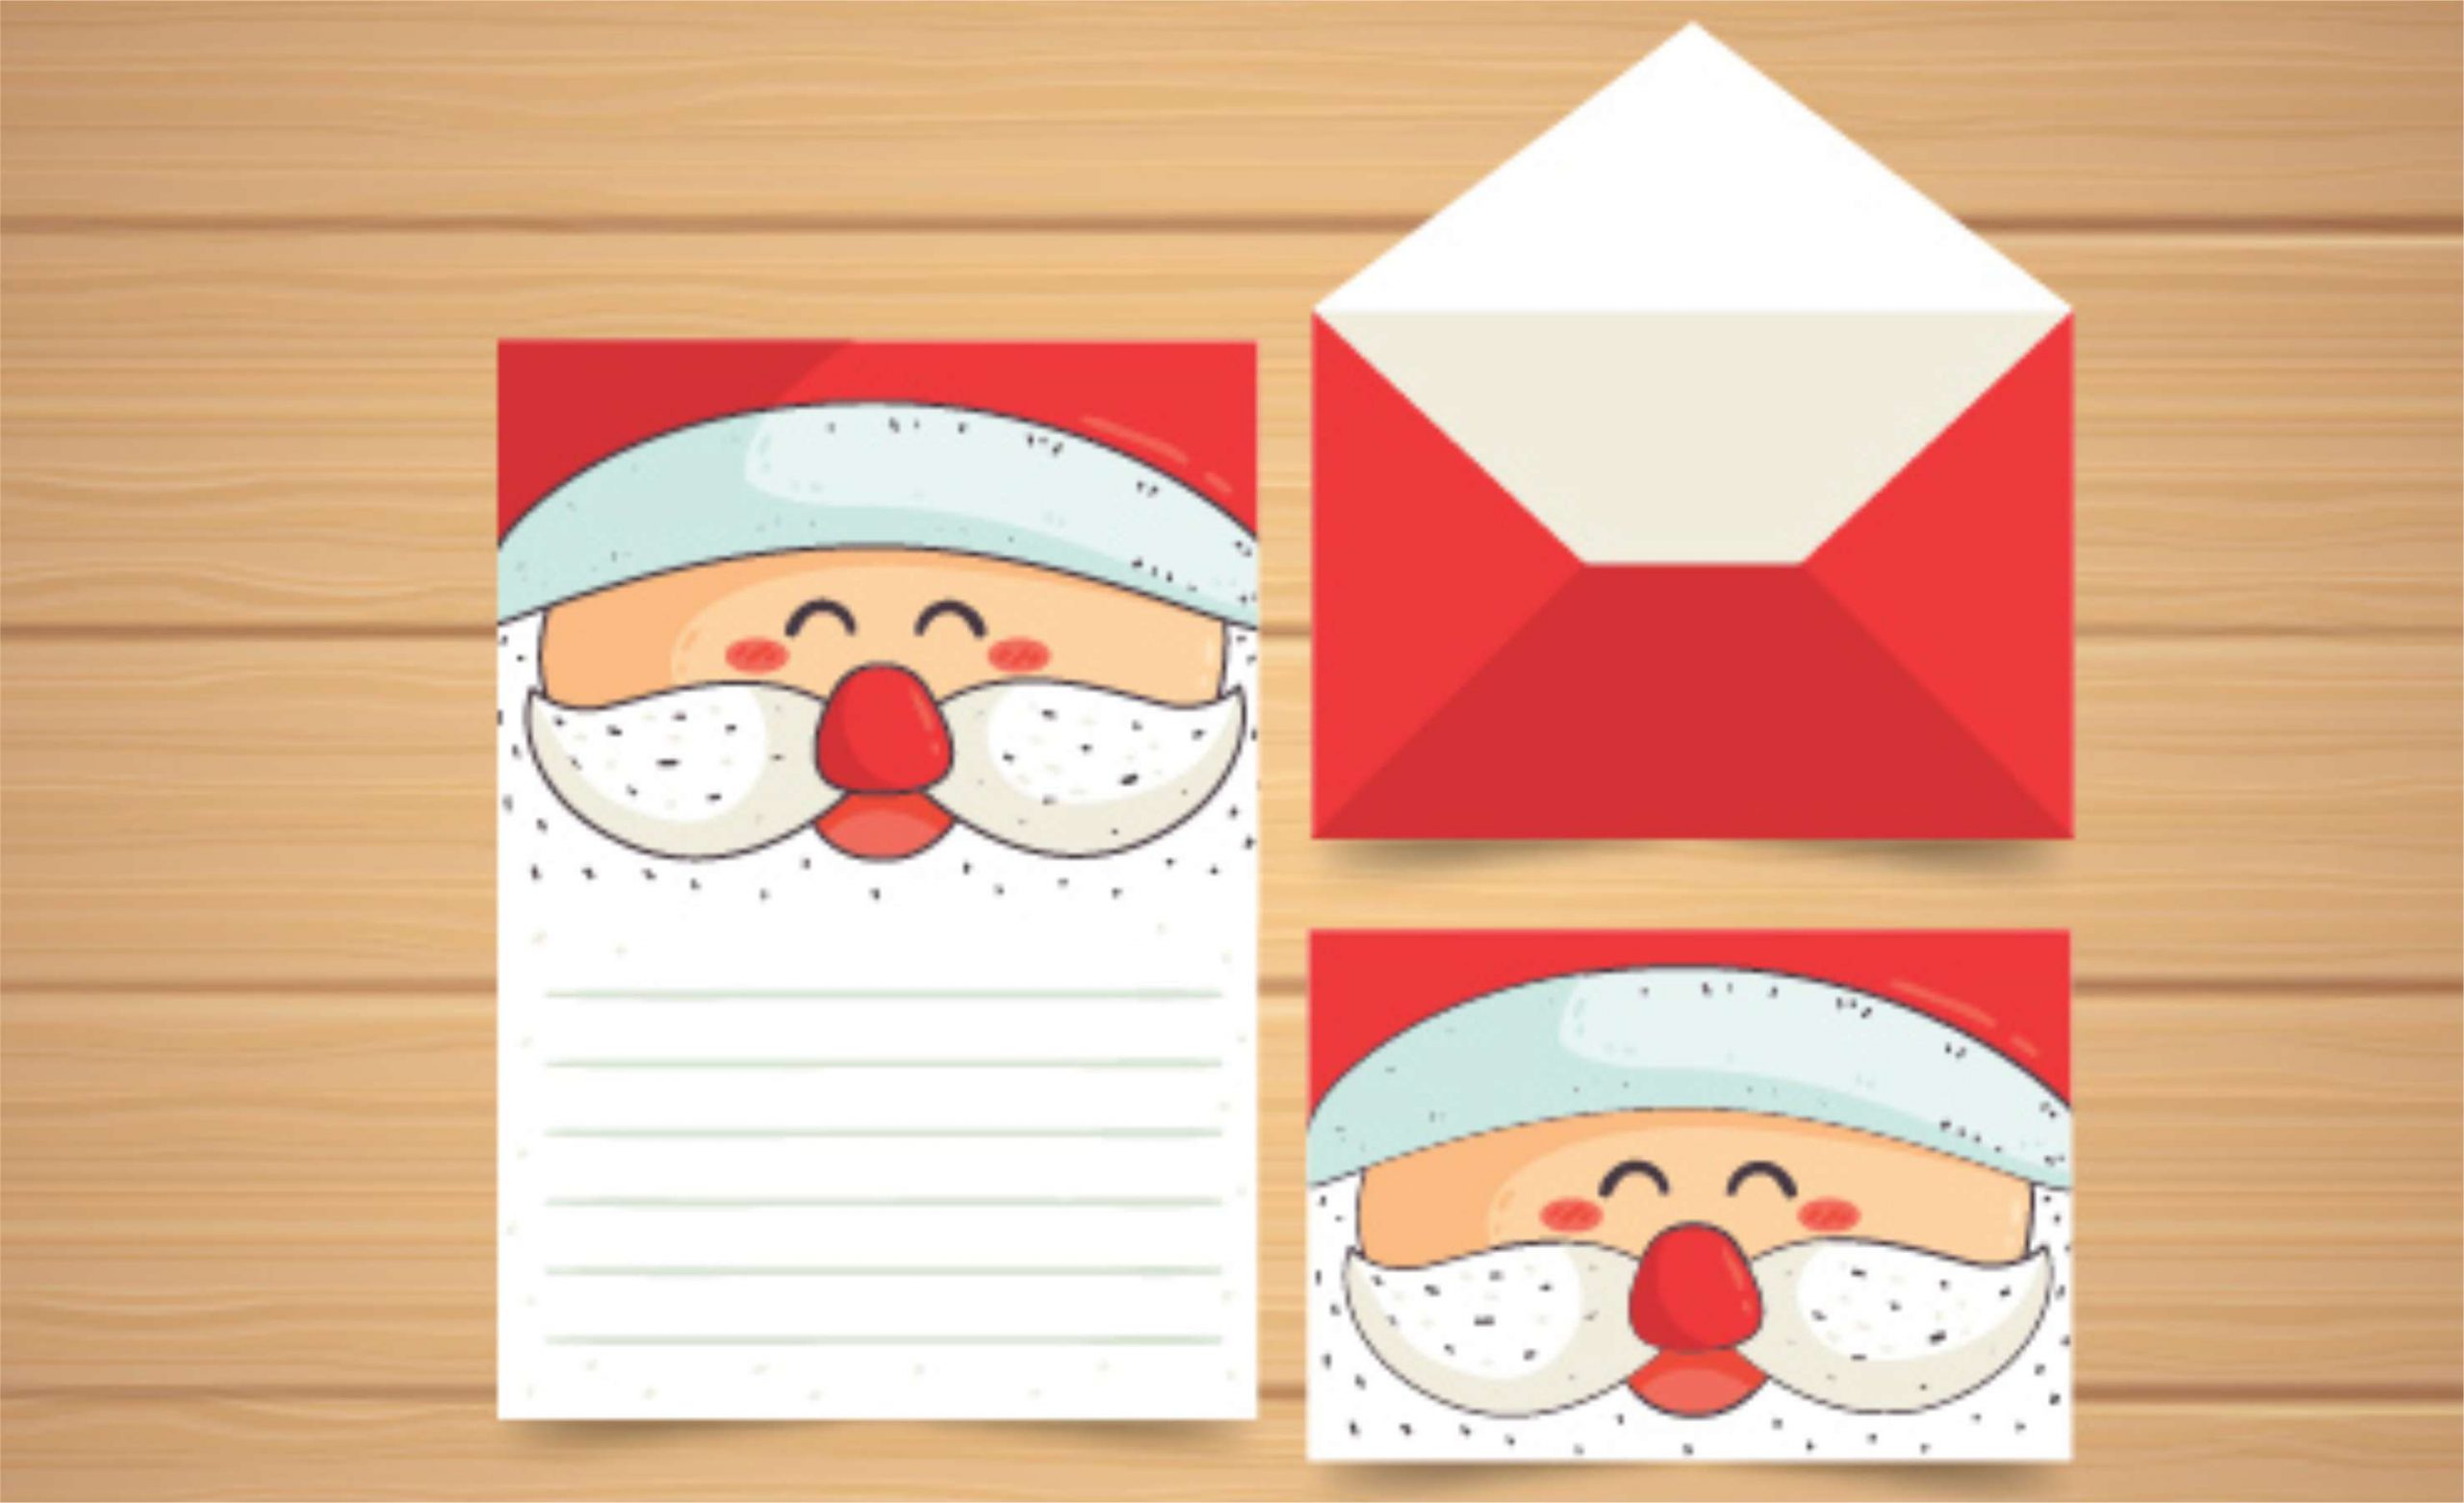 Caballero amable Día apaciguar Descarga estas plantillas de cartas para Papá Noel - VIGO EN FAMILIA